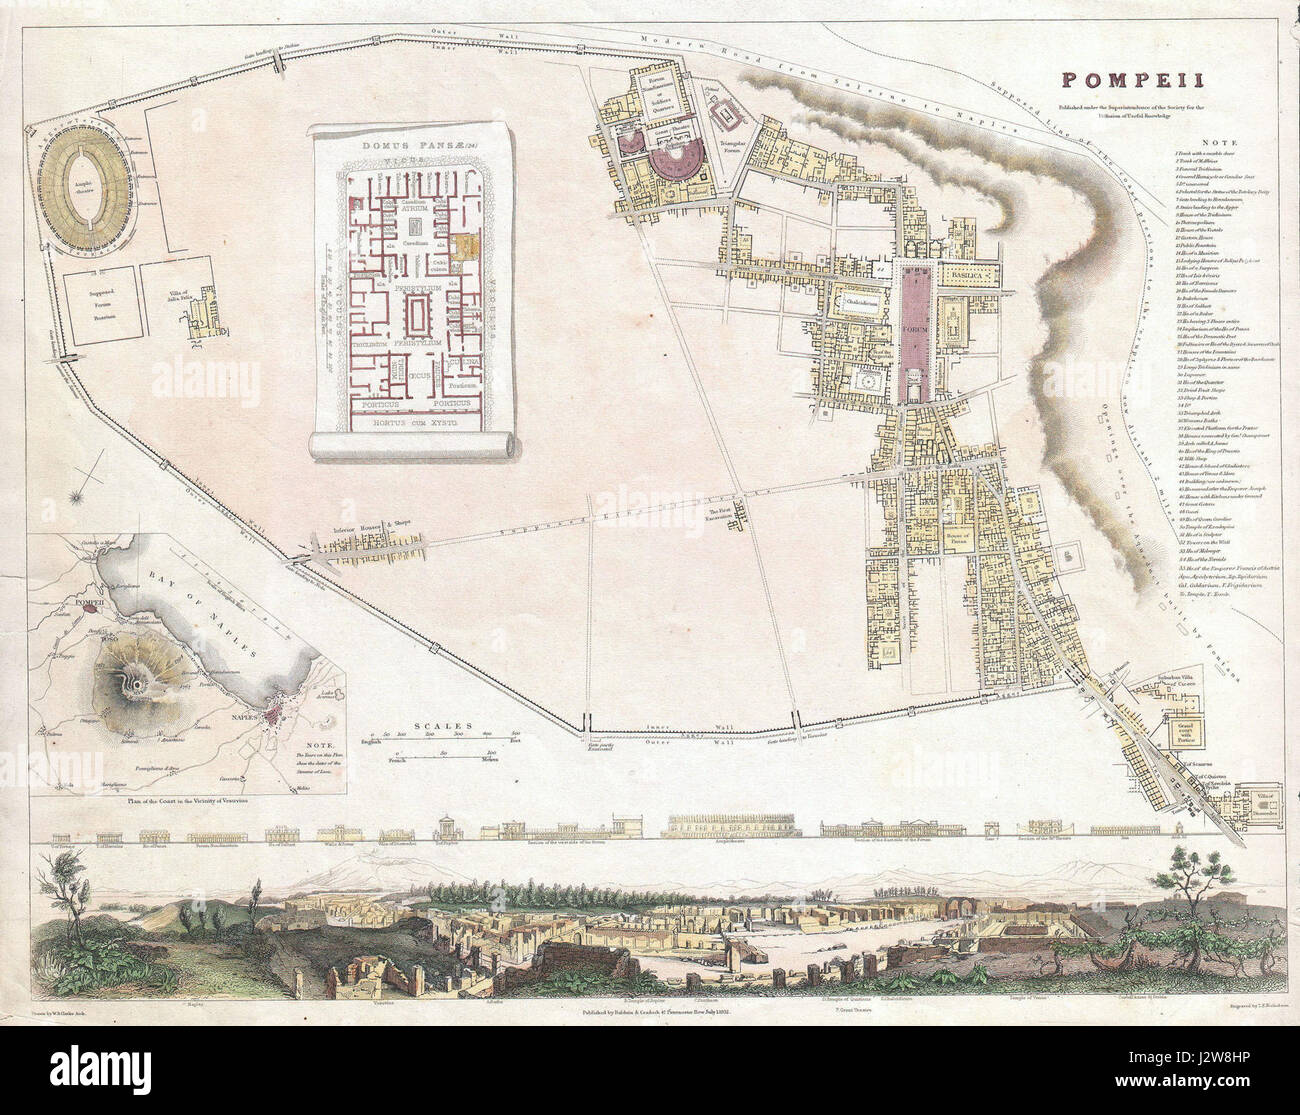 1832 S.D.U.K. City Plan or Map of Pompeii, Italy - Geographicus - Pompeii-SDUK-1832 Stock Photo